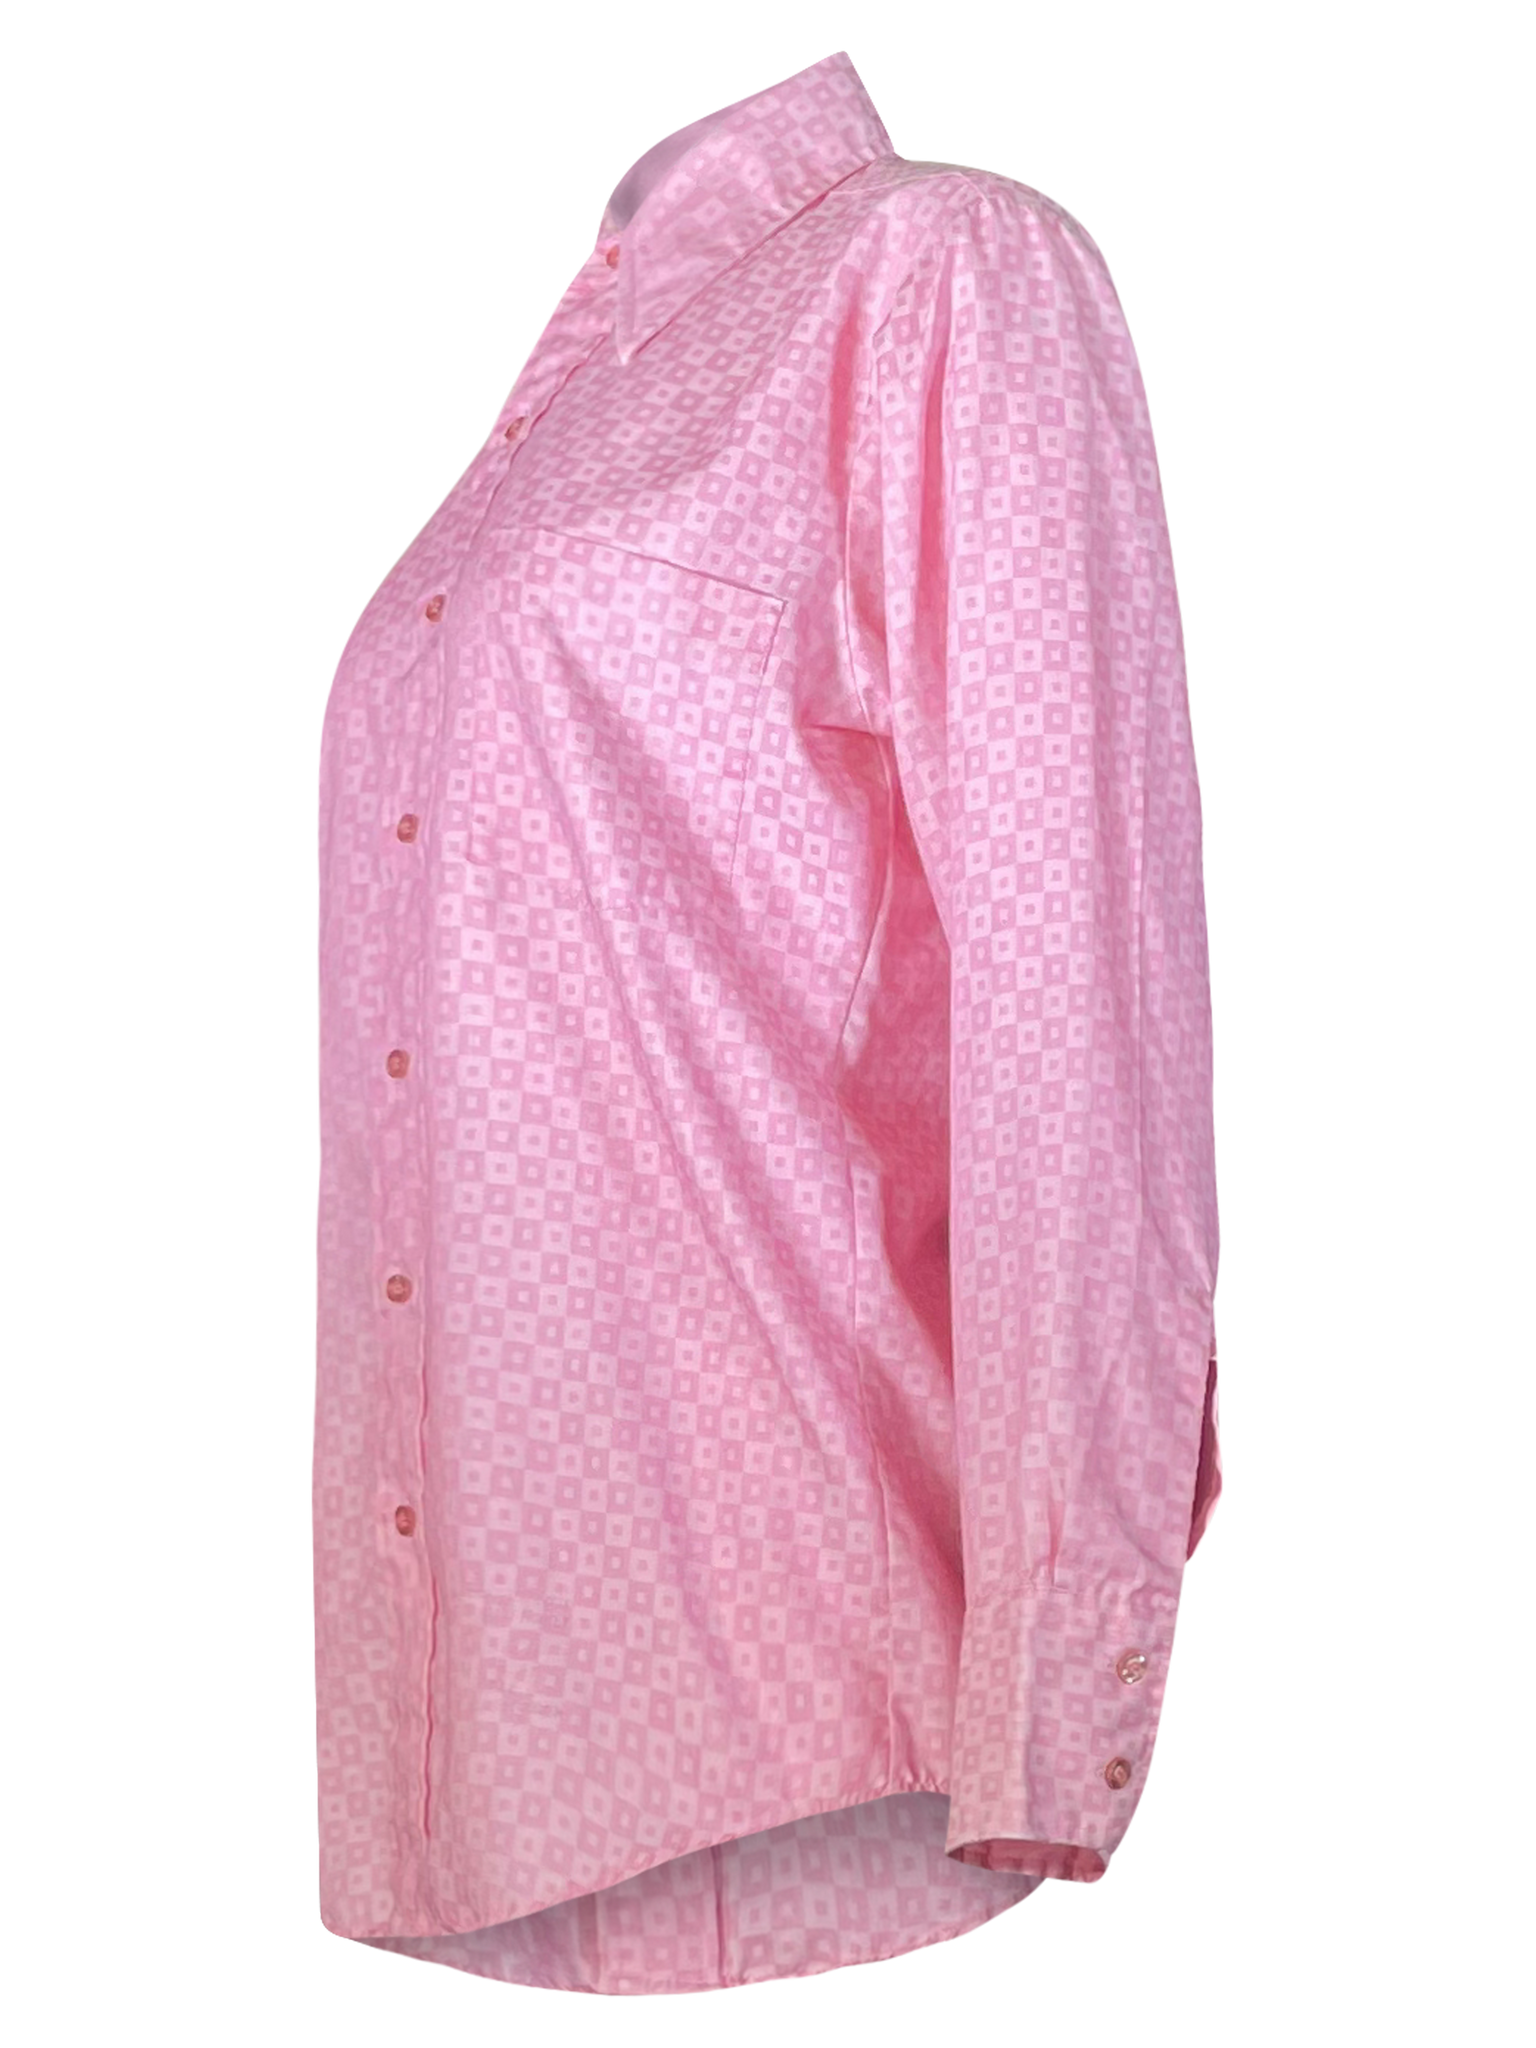 1970's Pink Checker Shirt